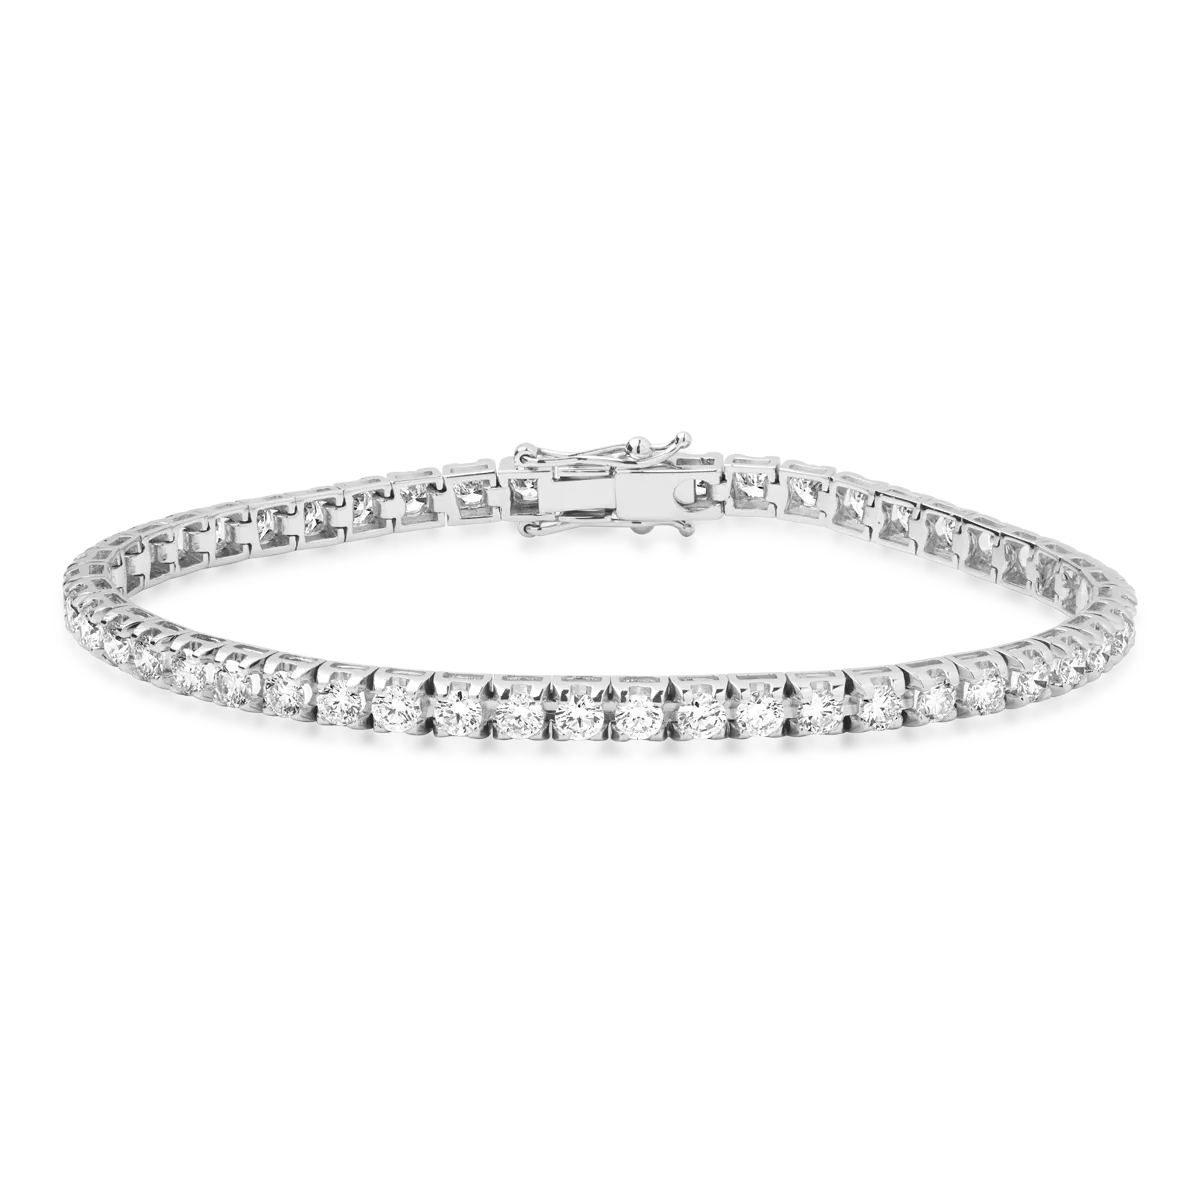 18K white gold tennis bracelet with diamonds of 4.4ct